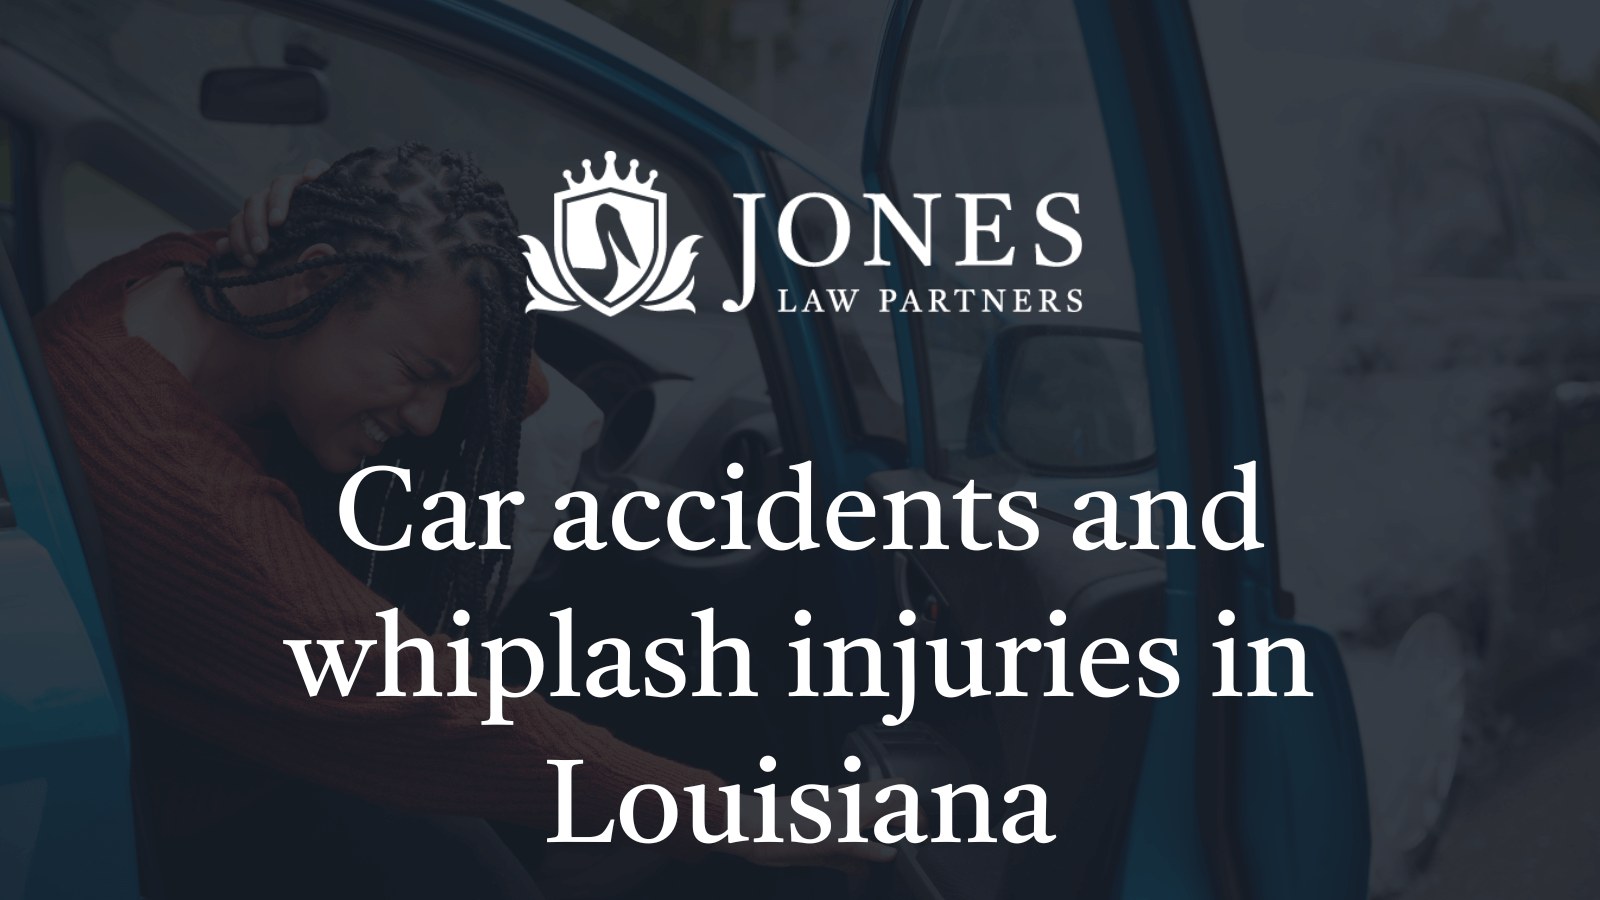 Car accidents and whiplash injuries in Louisiana - jones law partners alexandria louisiana